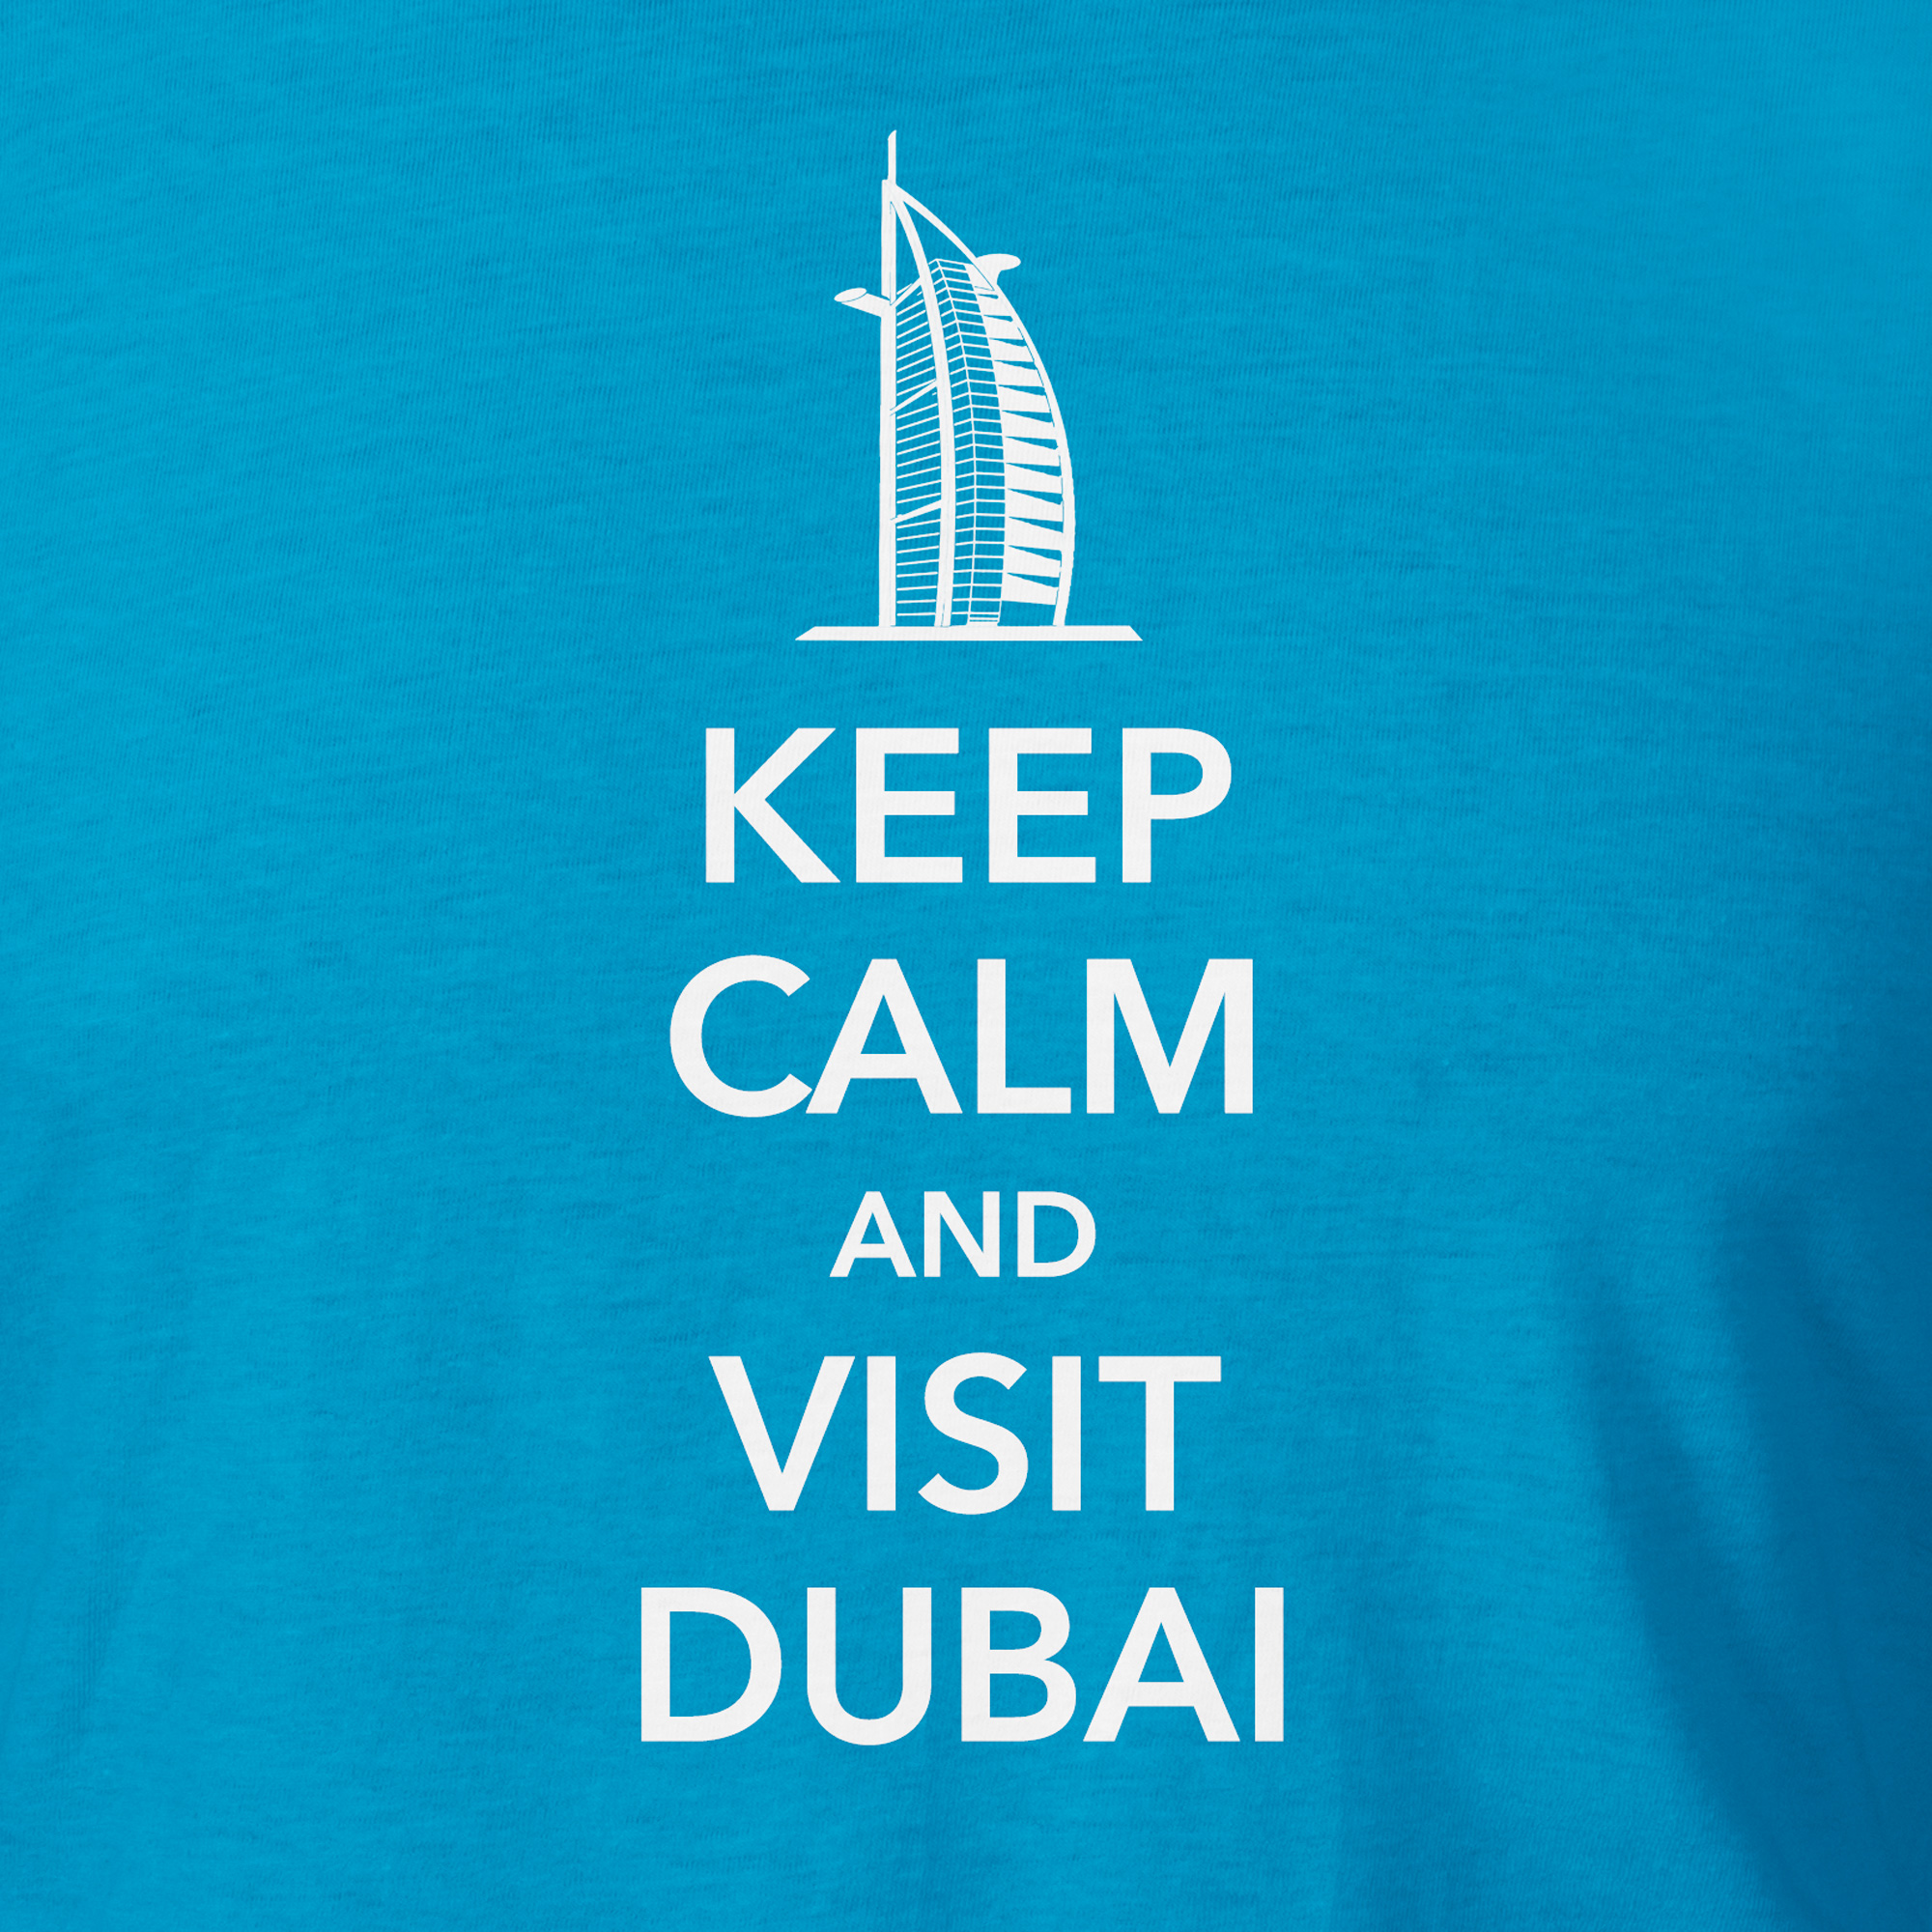 How To Visit Dubai